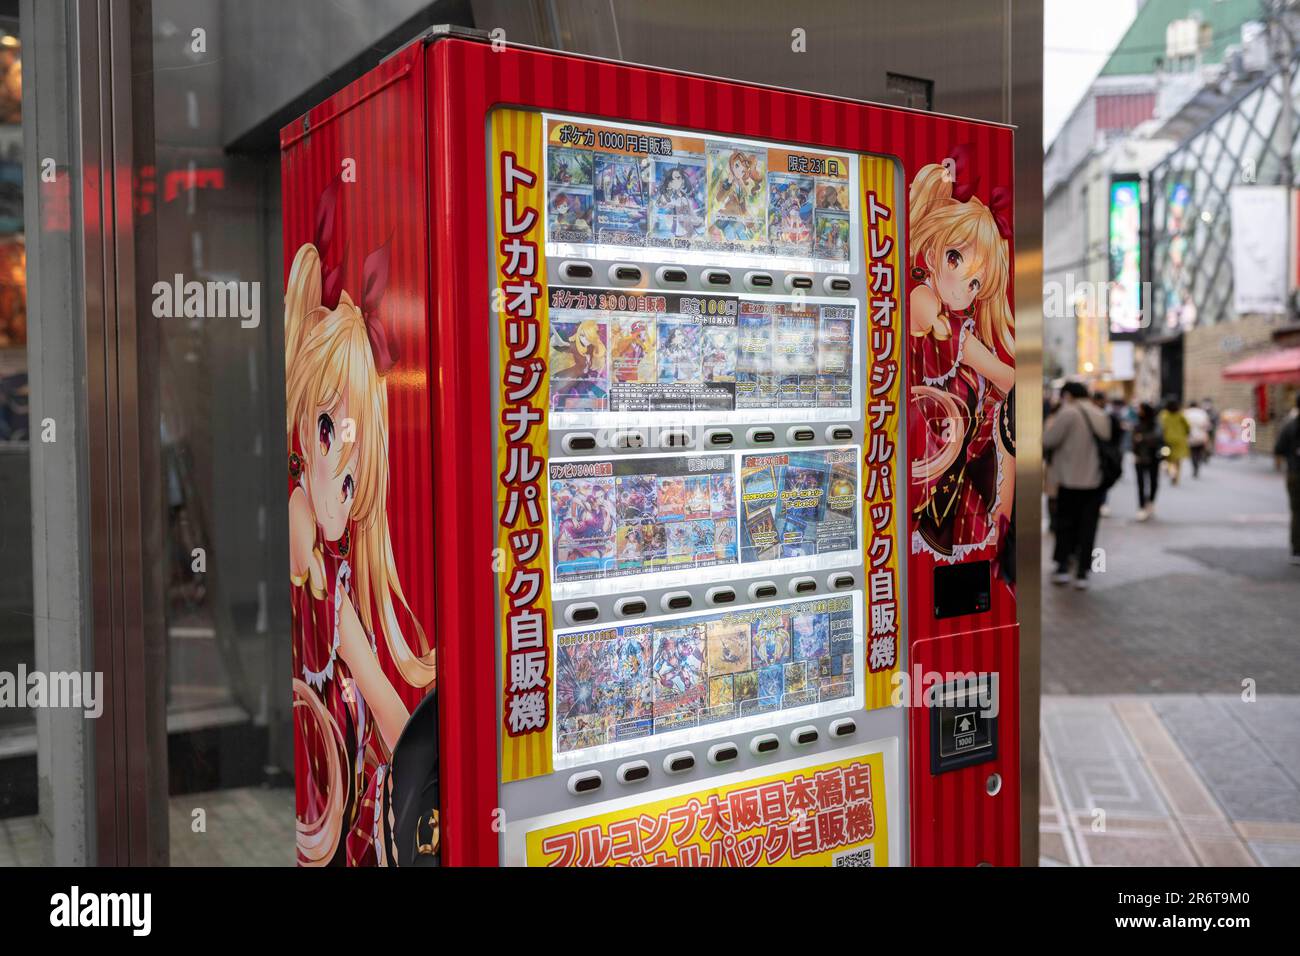 Chapter 686 Awa Odori Anime Vending Machine  The Flying Tofu